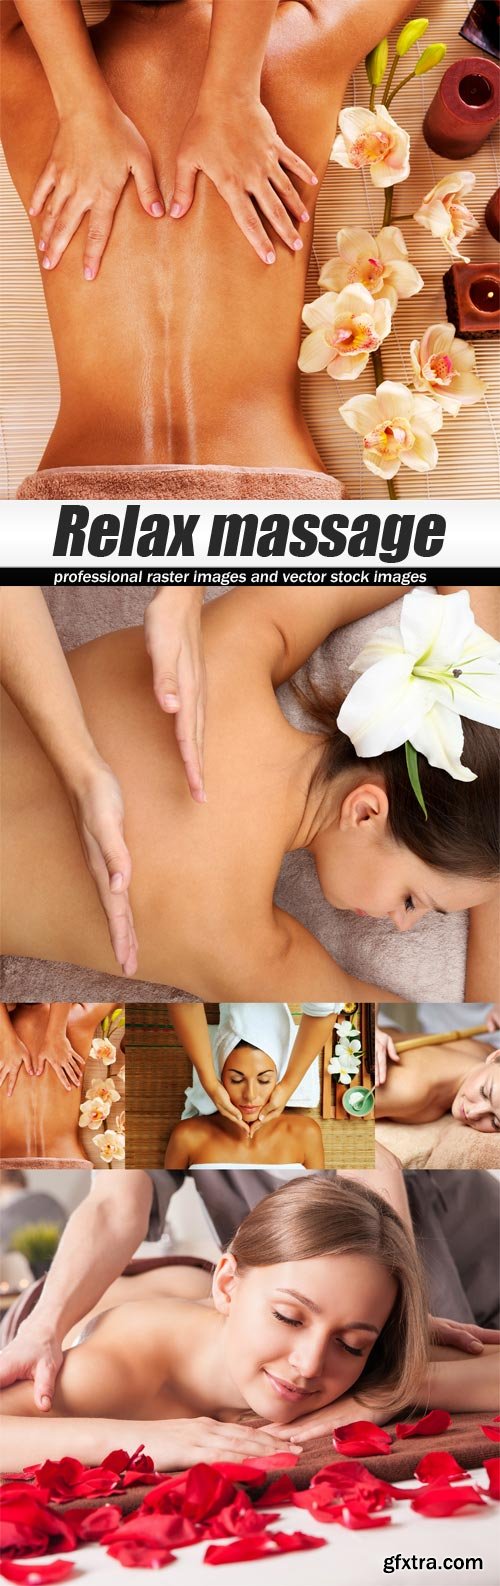 Relax massage